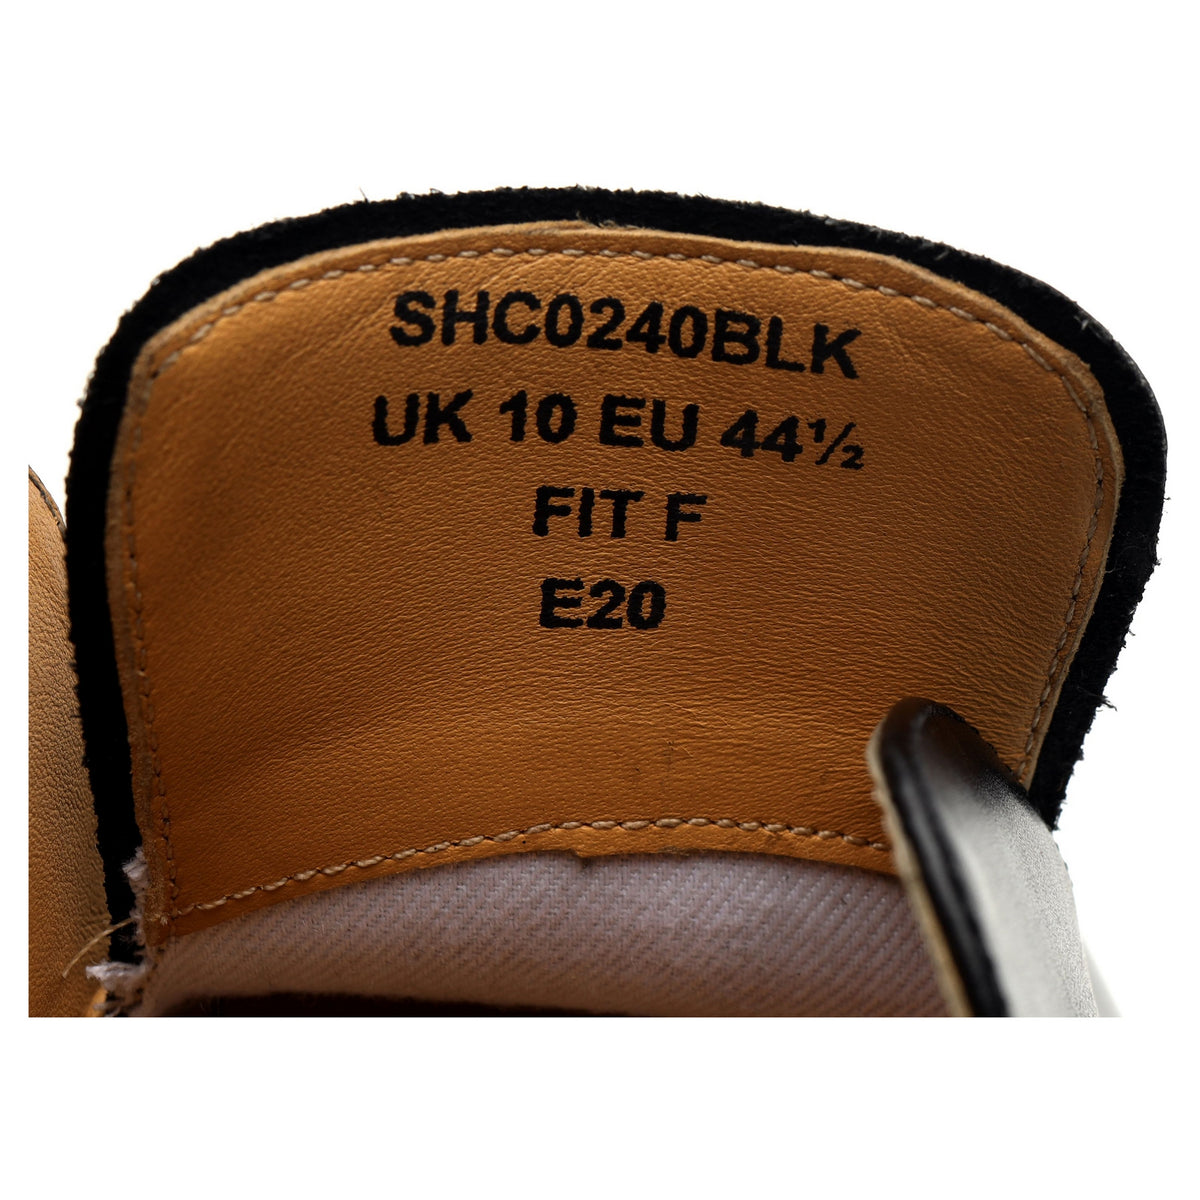 &#39;SHC0240BLK&#39; Black Leather Monk Strap UK 10 F